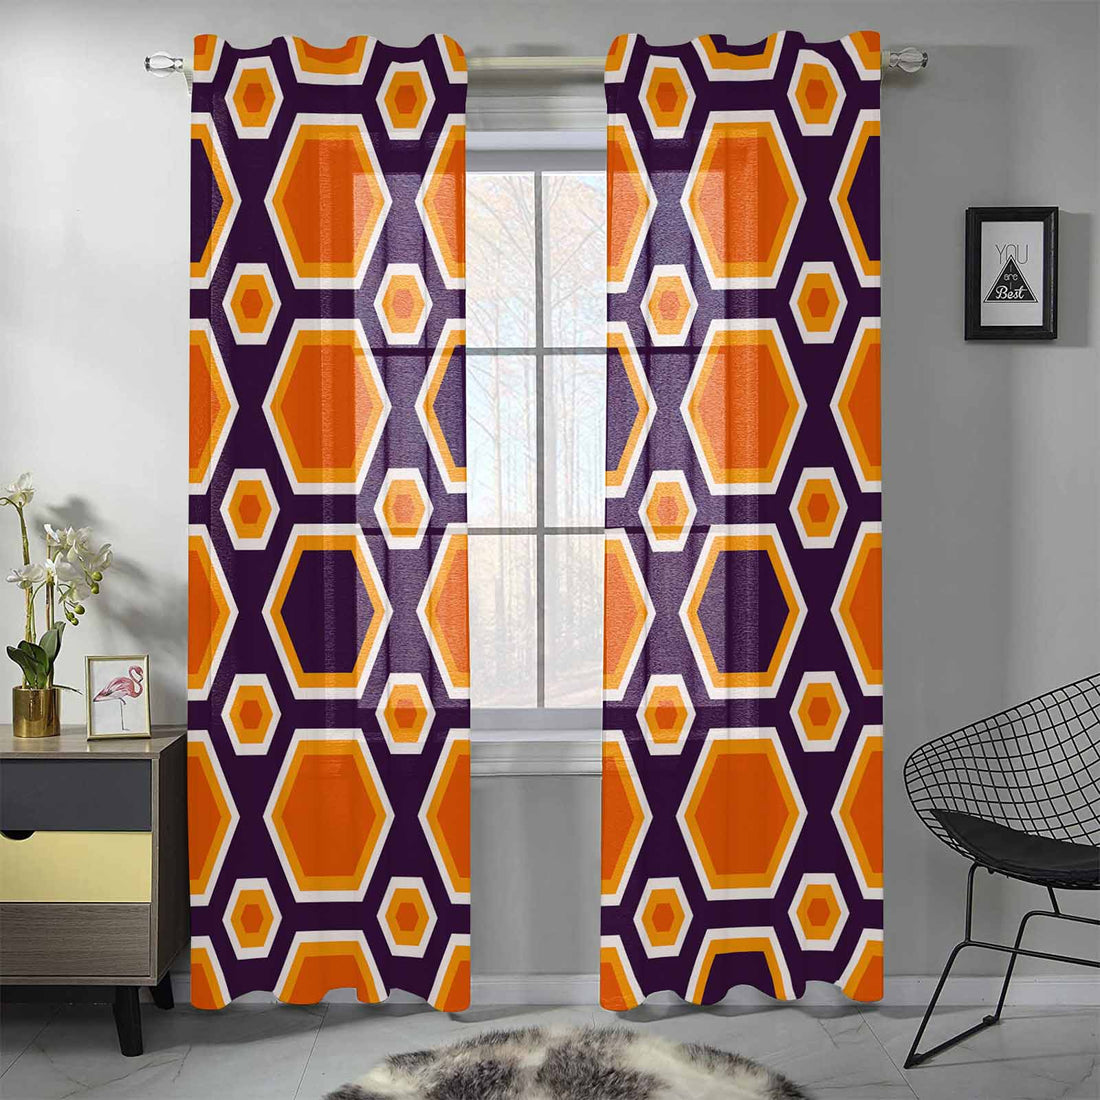 Kate McEnroe New York Sheer 2 - Panel Window Curtains in Mid Century Modern Geometric Halloween OrangeWindow CurtainsDG1169991DXH7857D